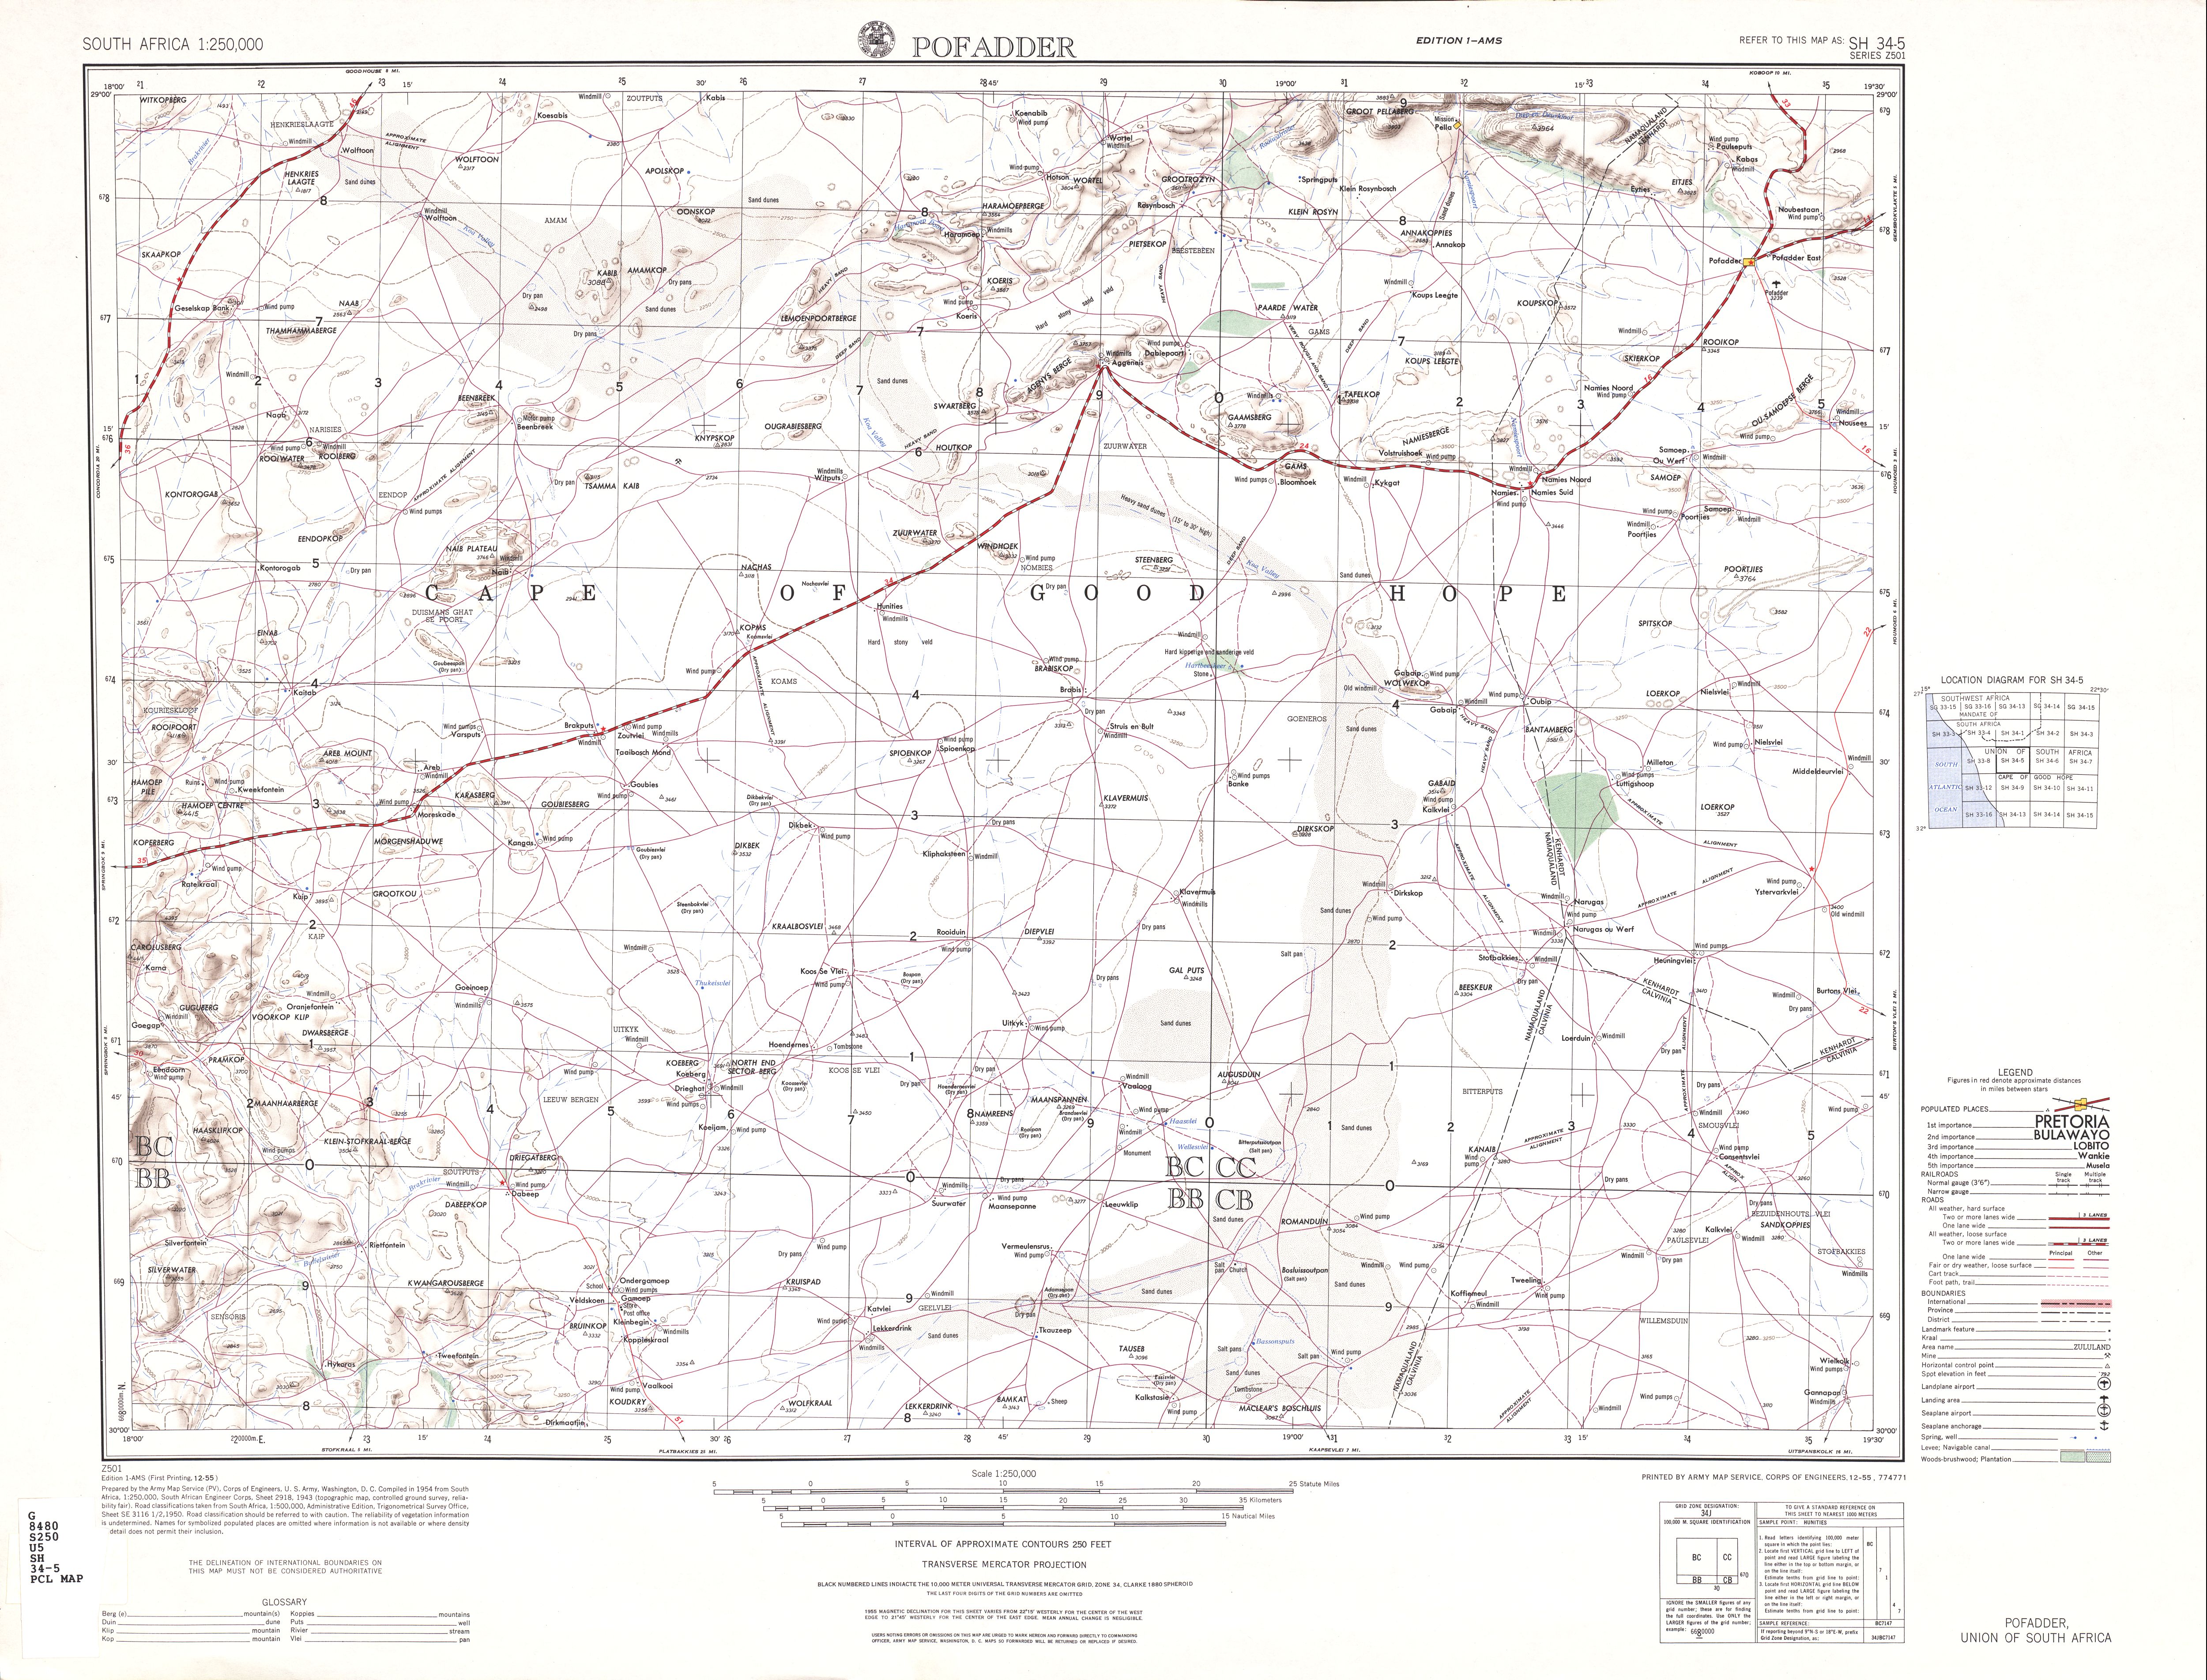 Hoja Pofadder del Mapa Topográfico de África Meridional 1954